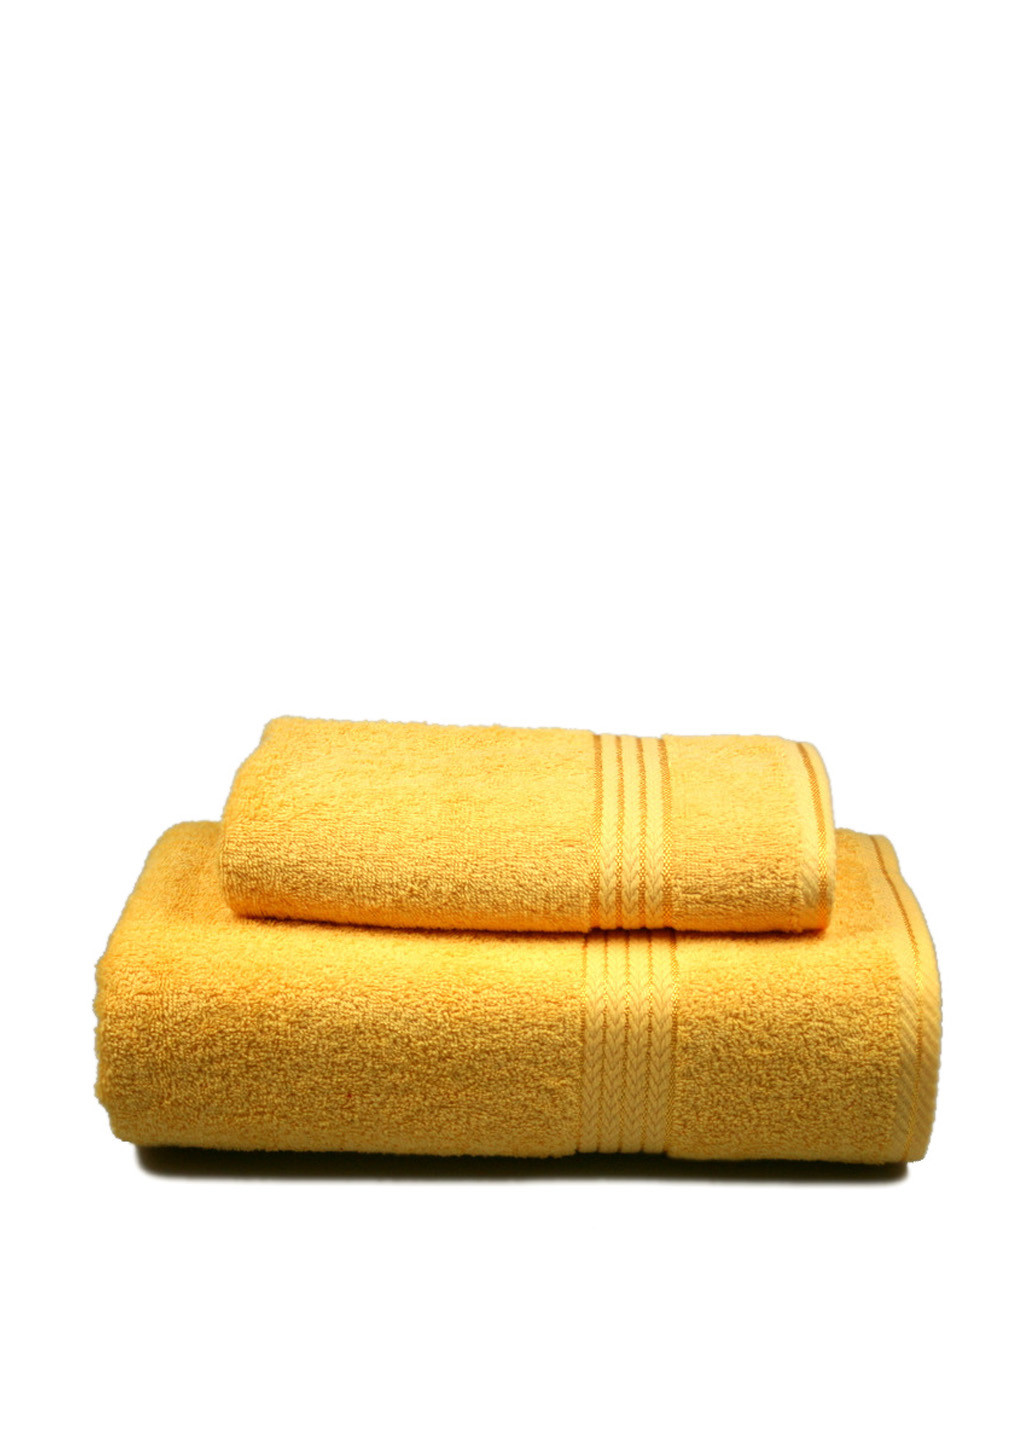 No Brand полотенце, 70х140 см однотонный желтый производство - Пакистан